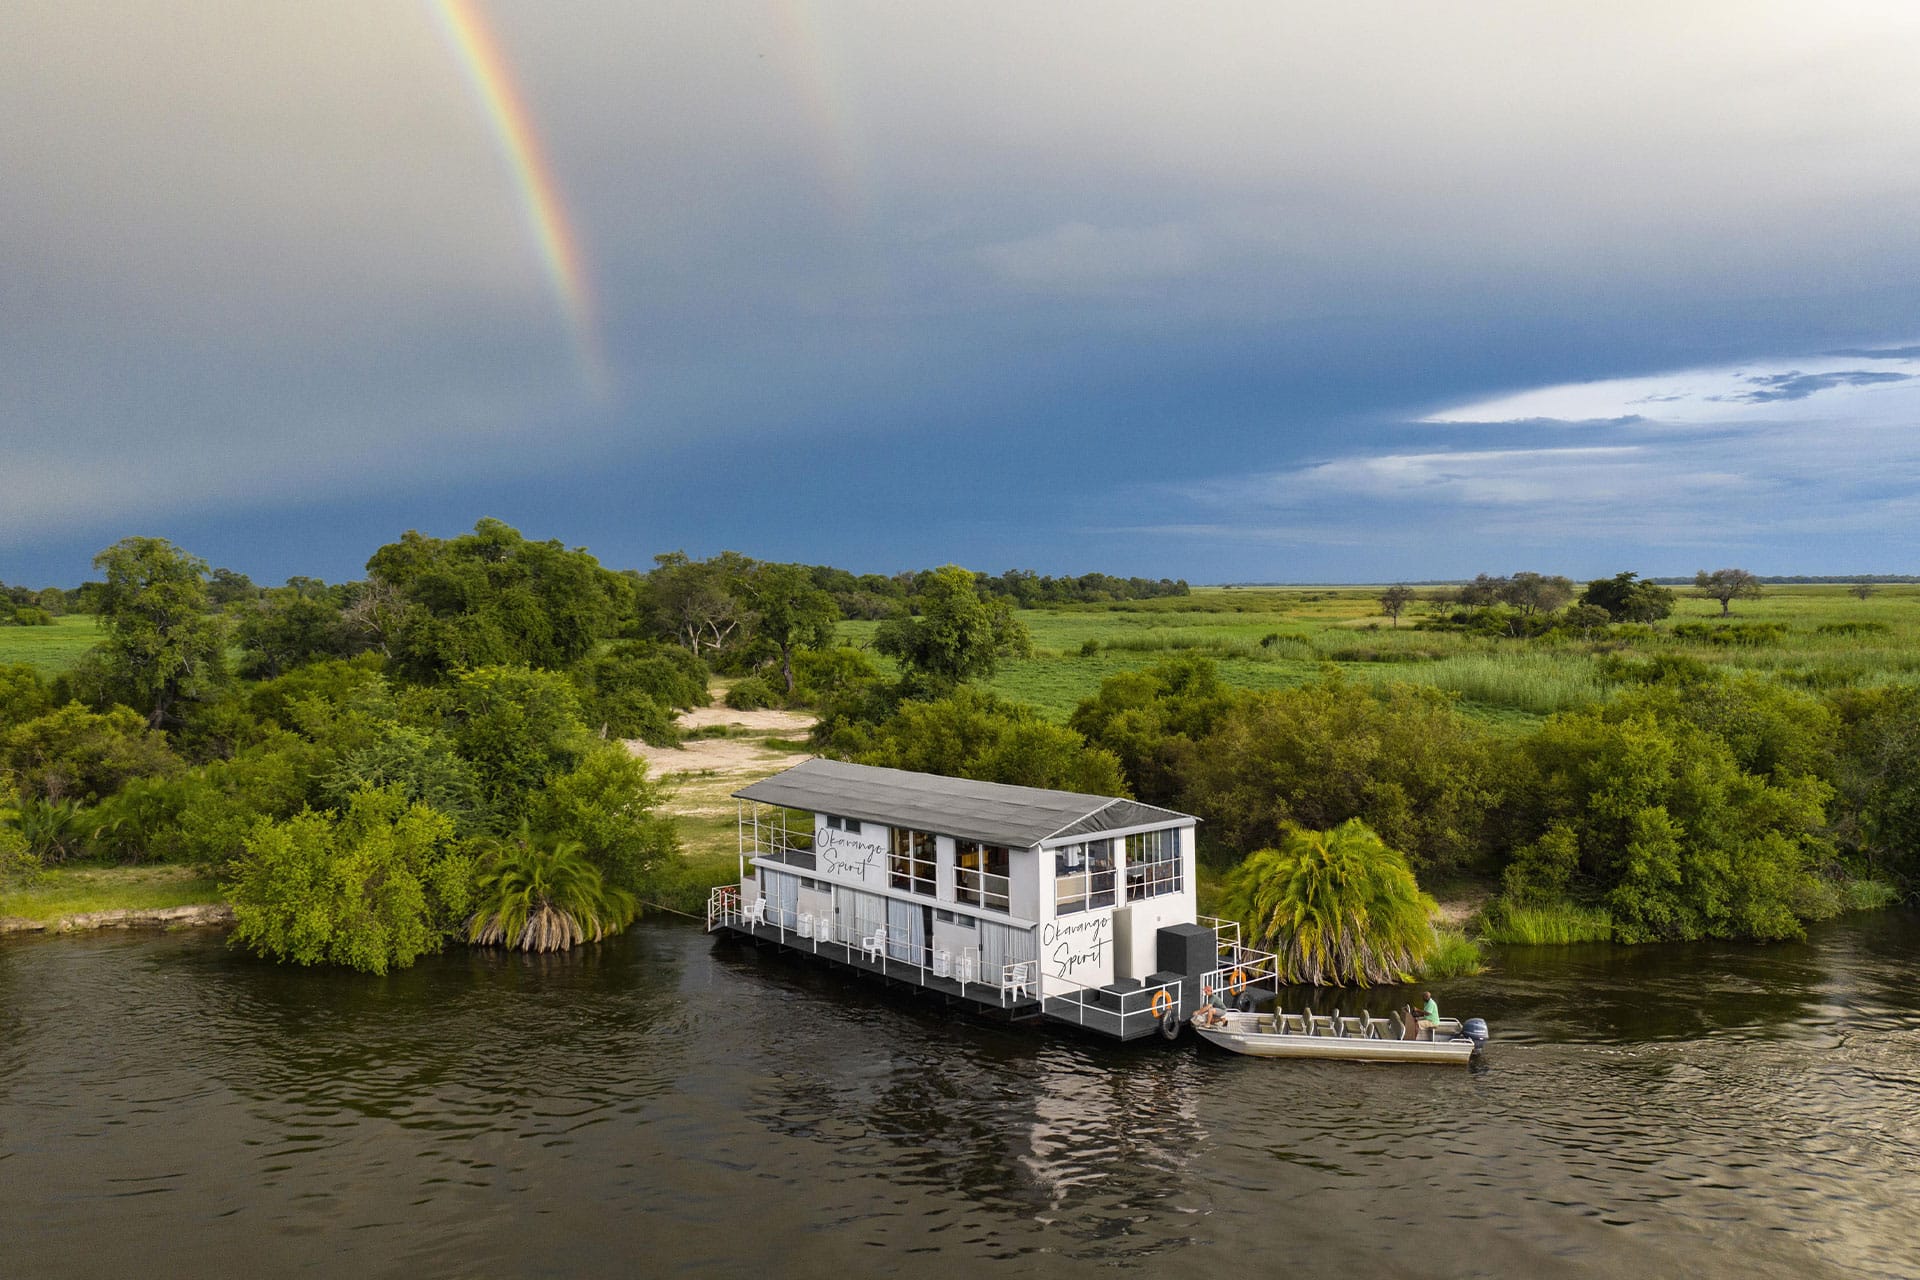 The Okavango Spirit houseboat on a river in Botswana.